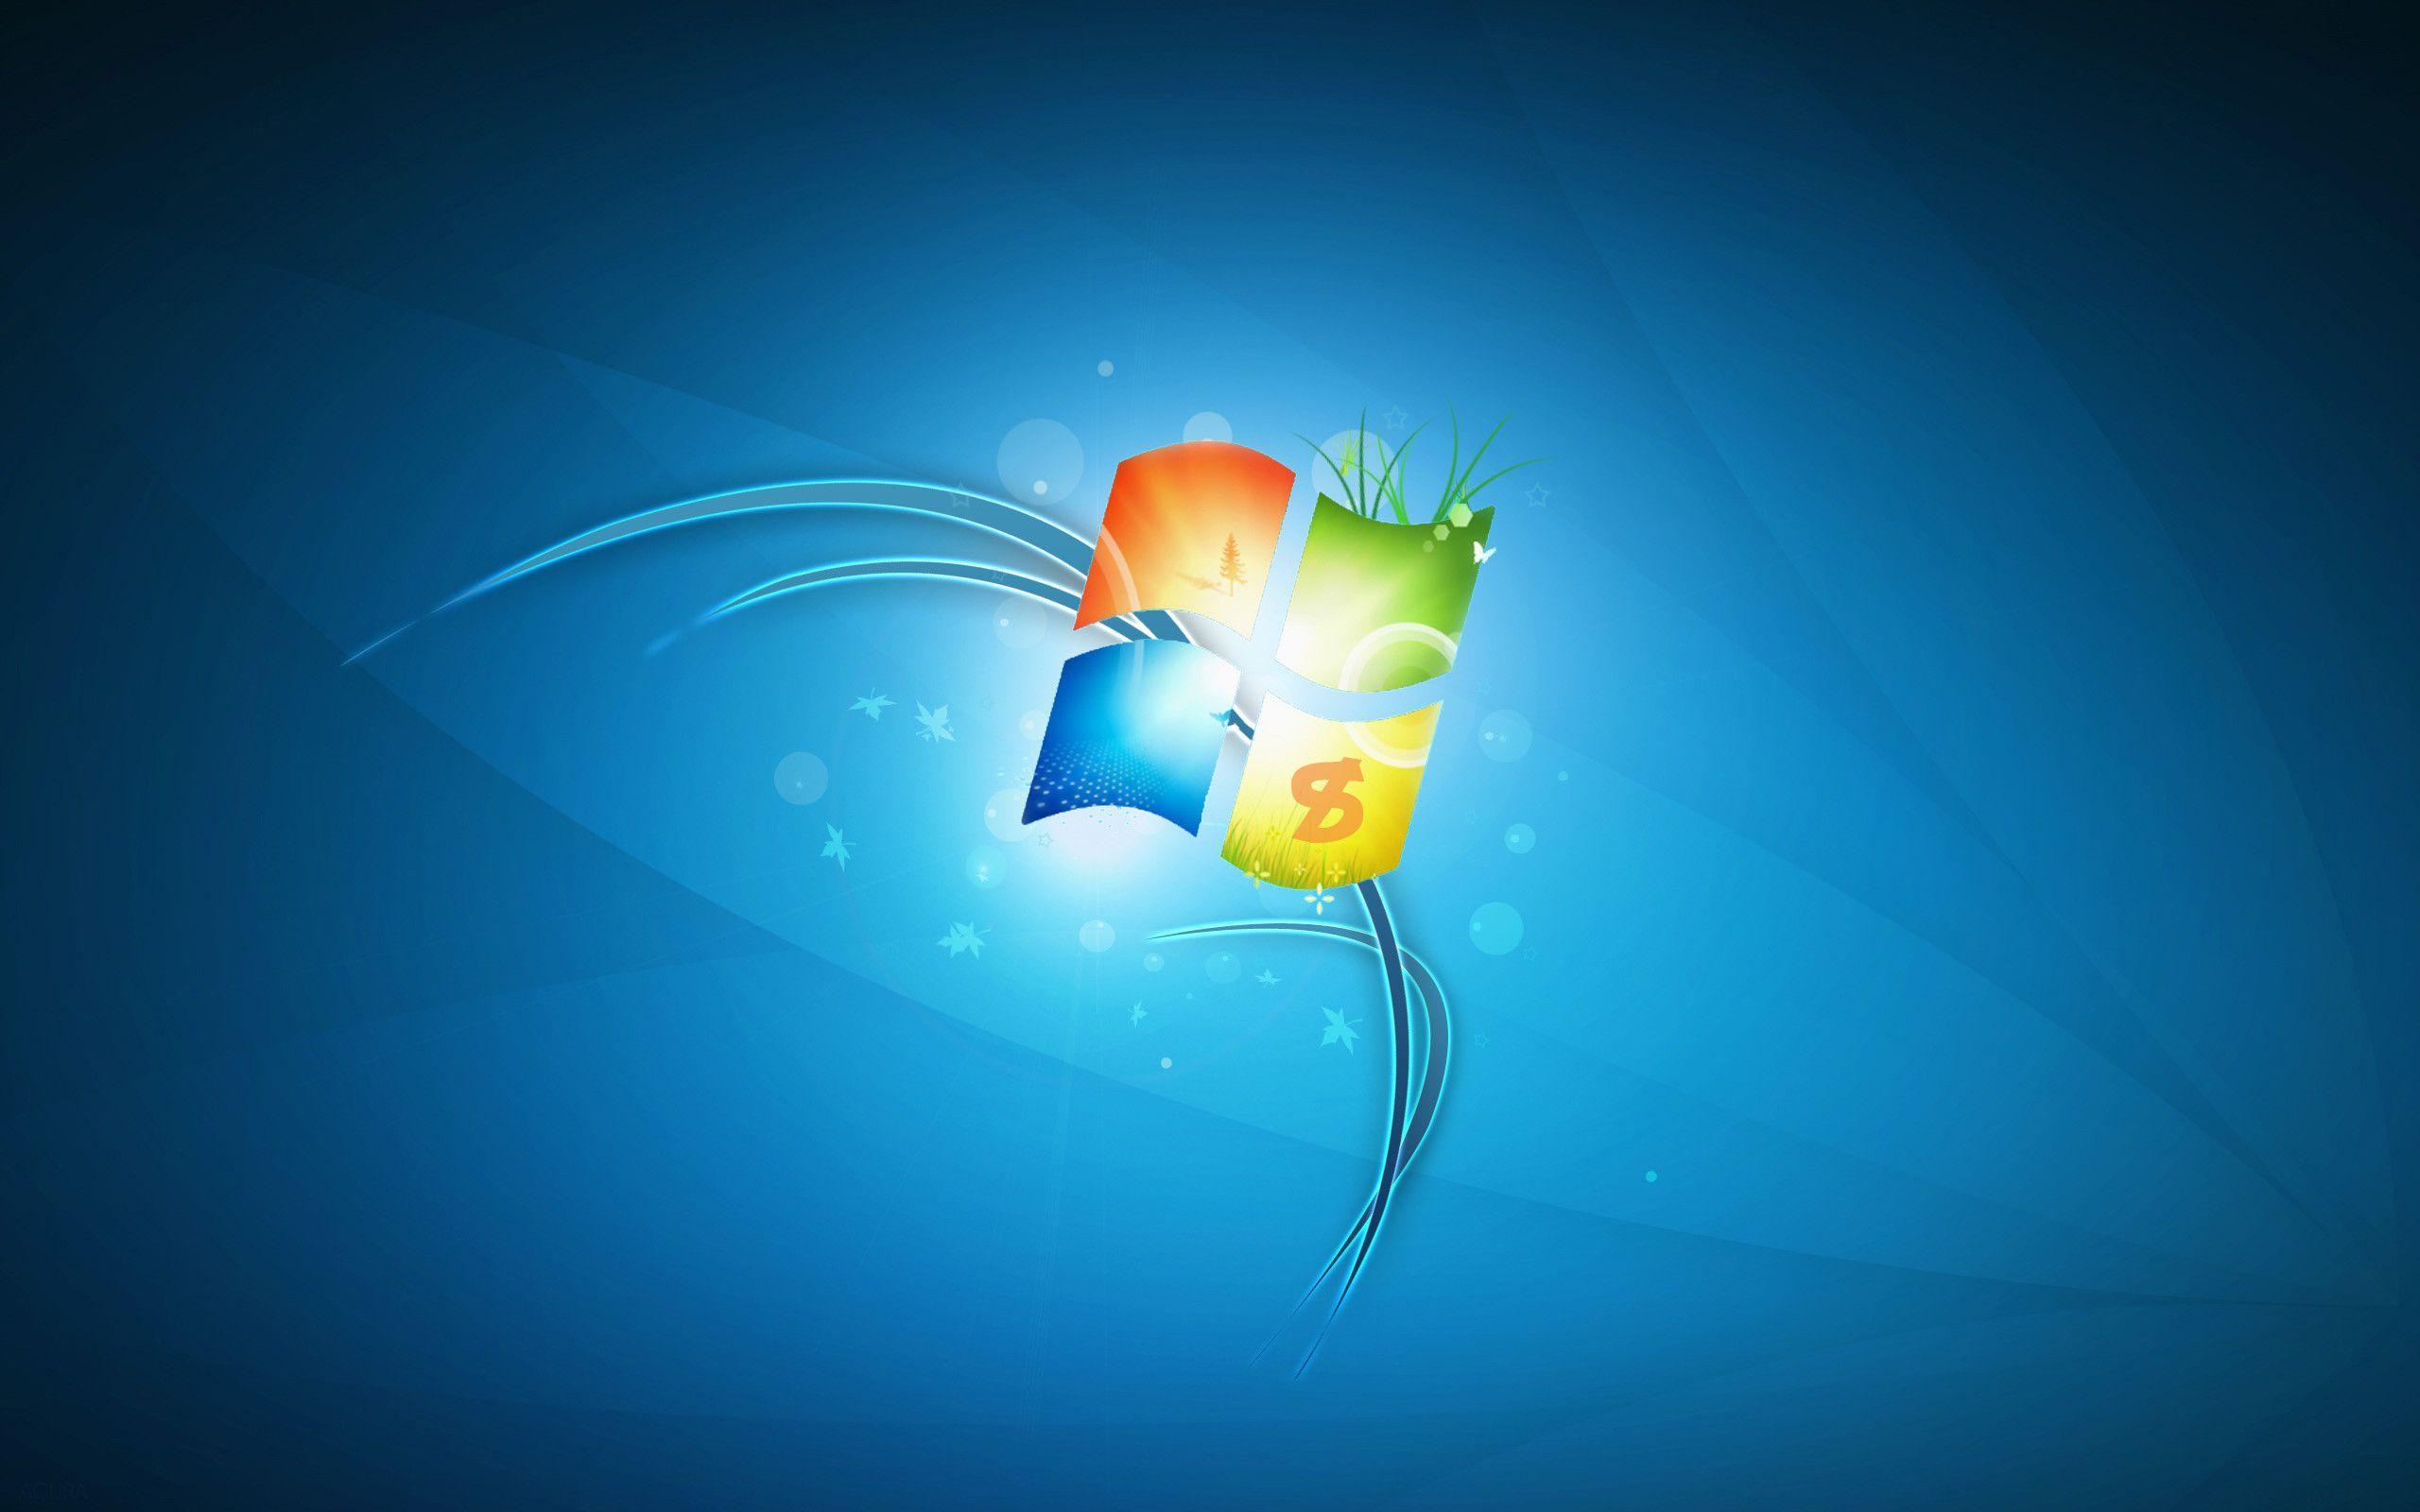 Windows 8 Windows desktop wallpaper